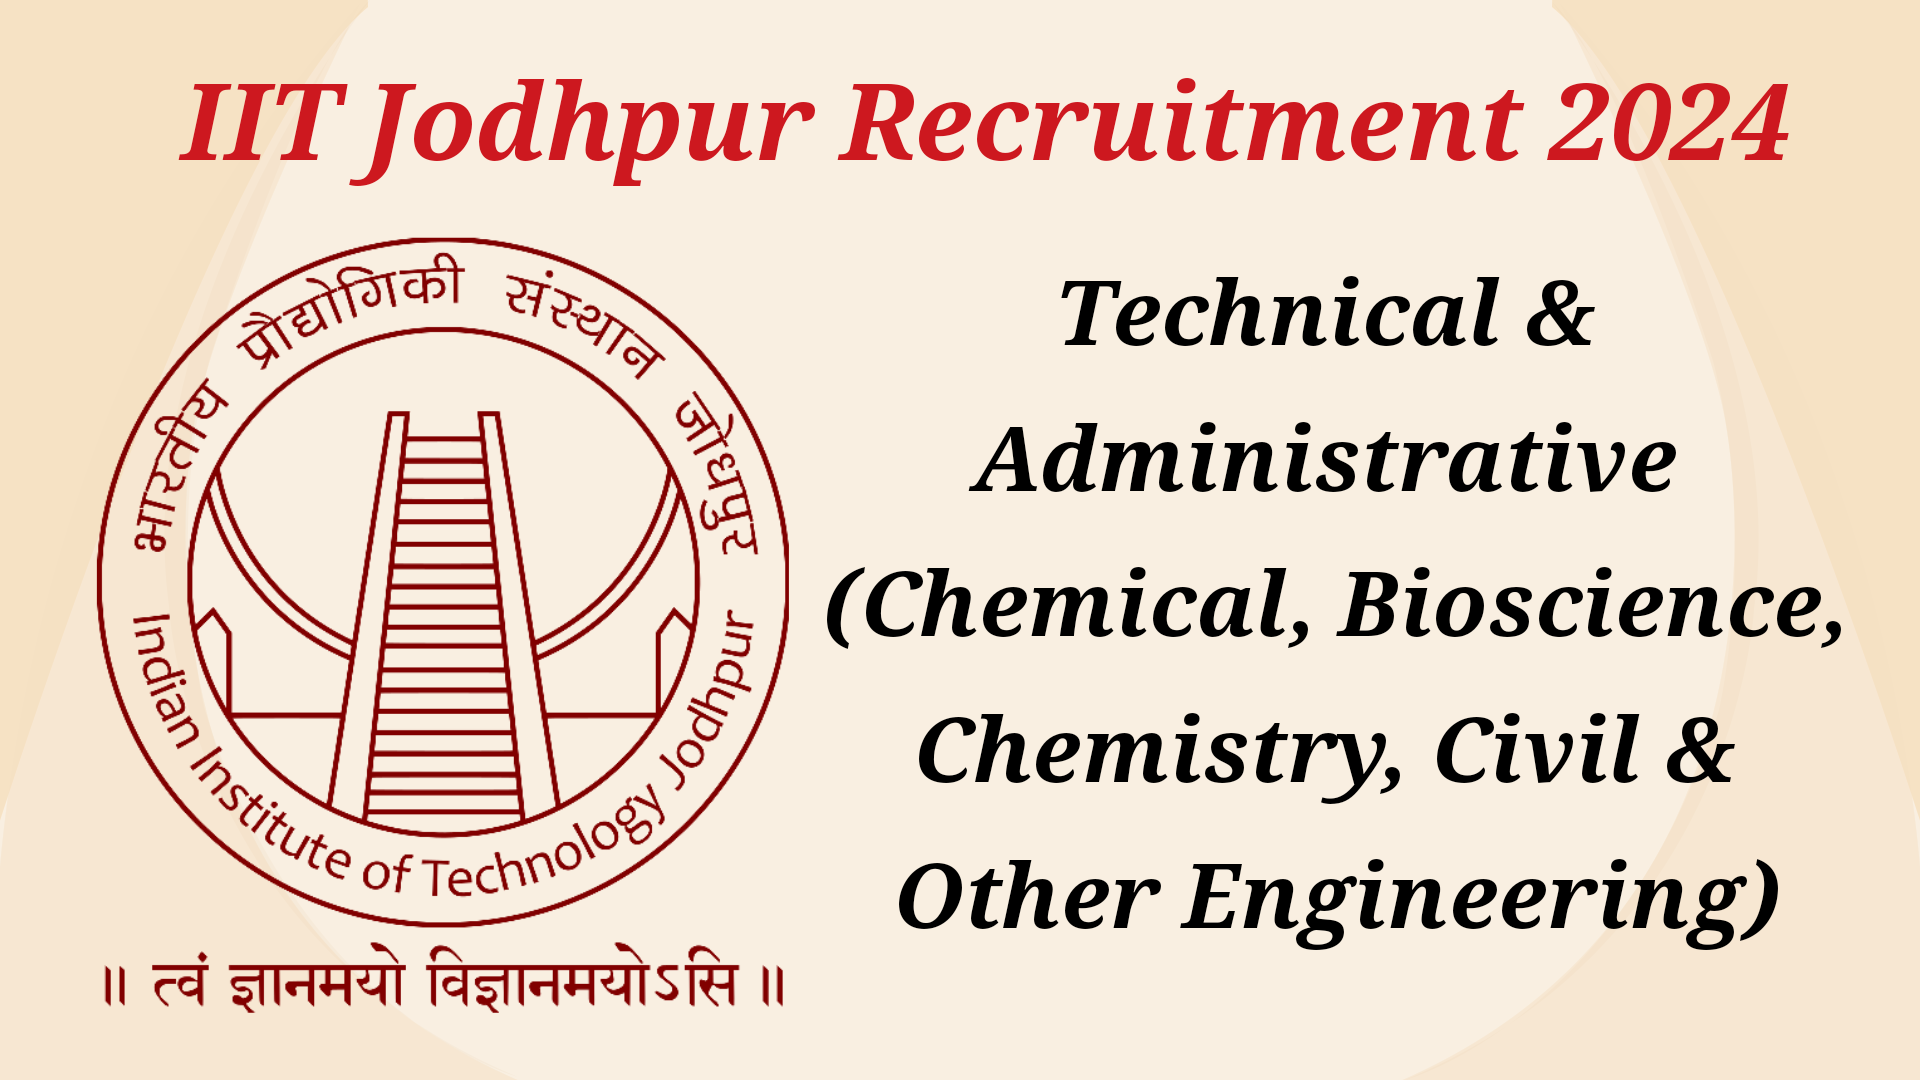 IIT Jodhpur Technical & Administrative Recruitment 2024